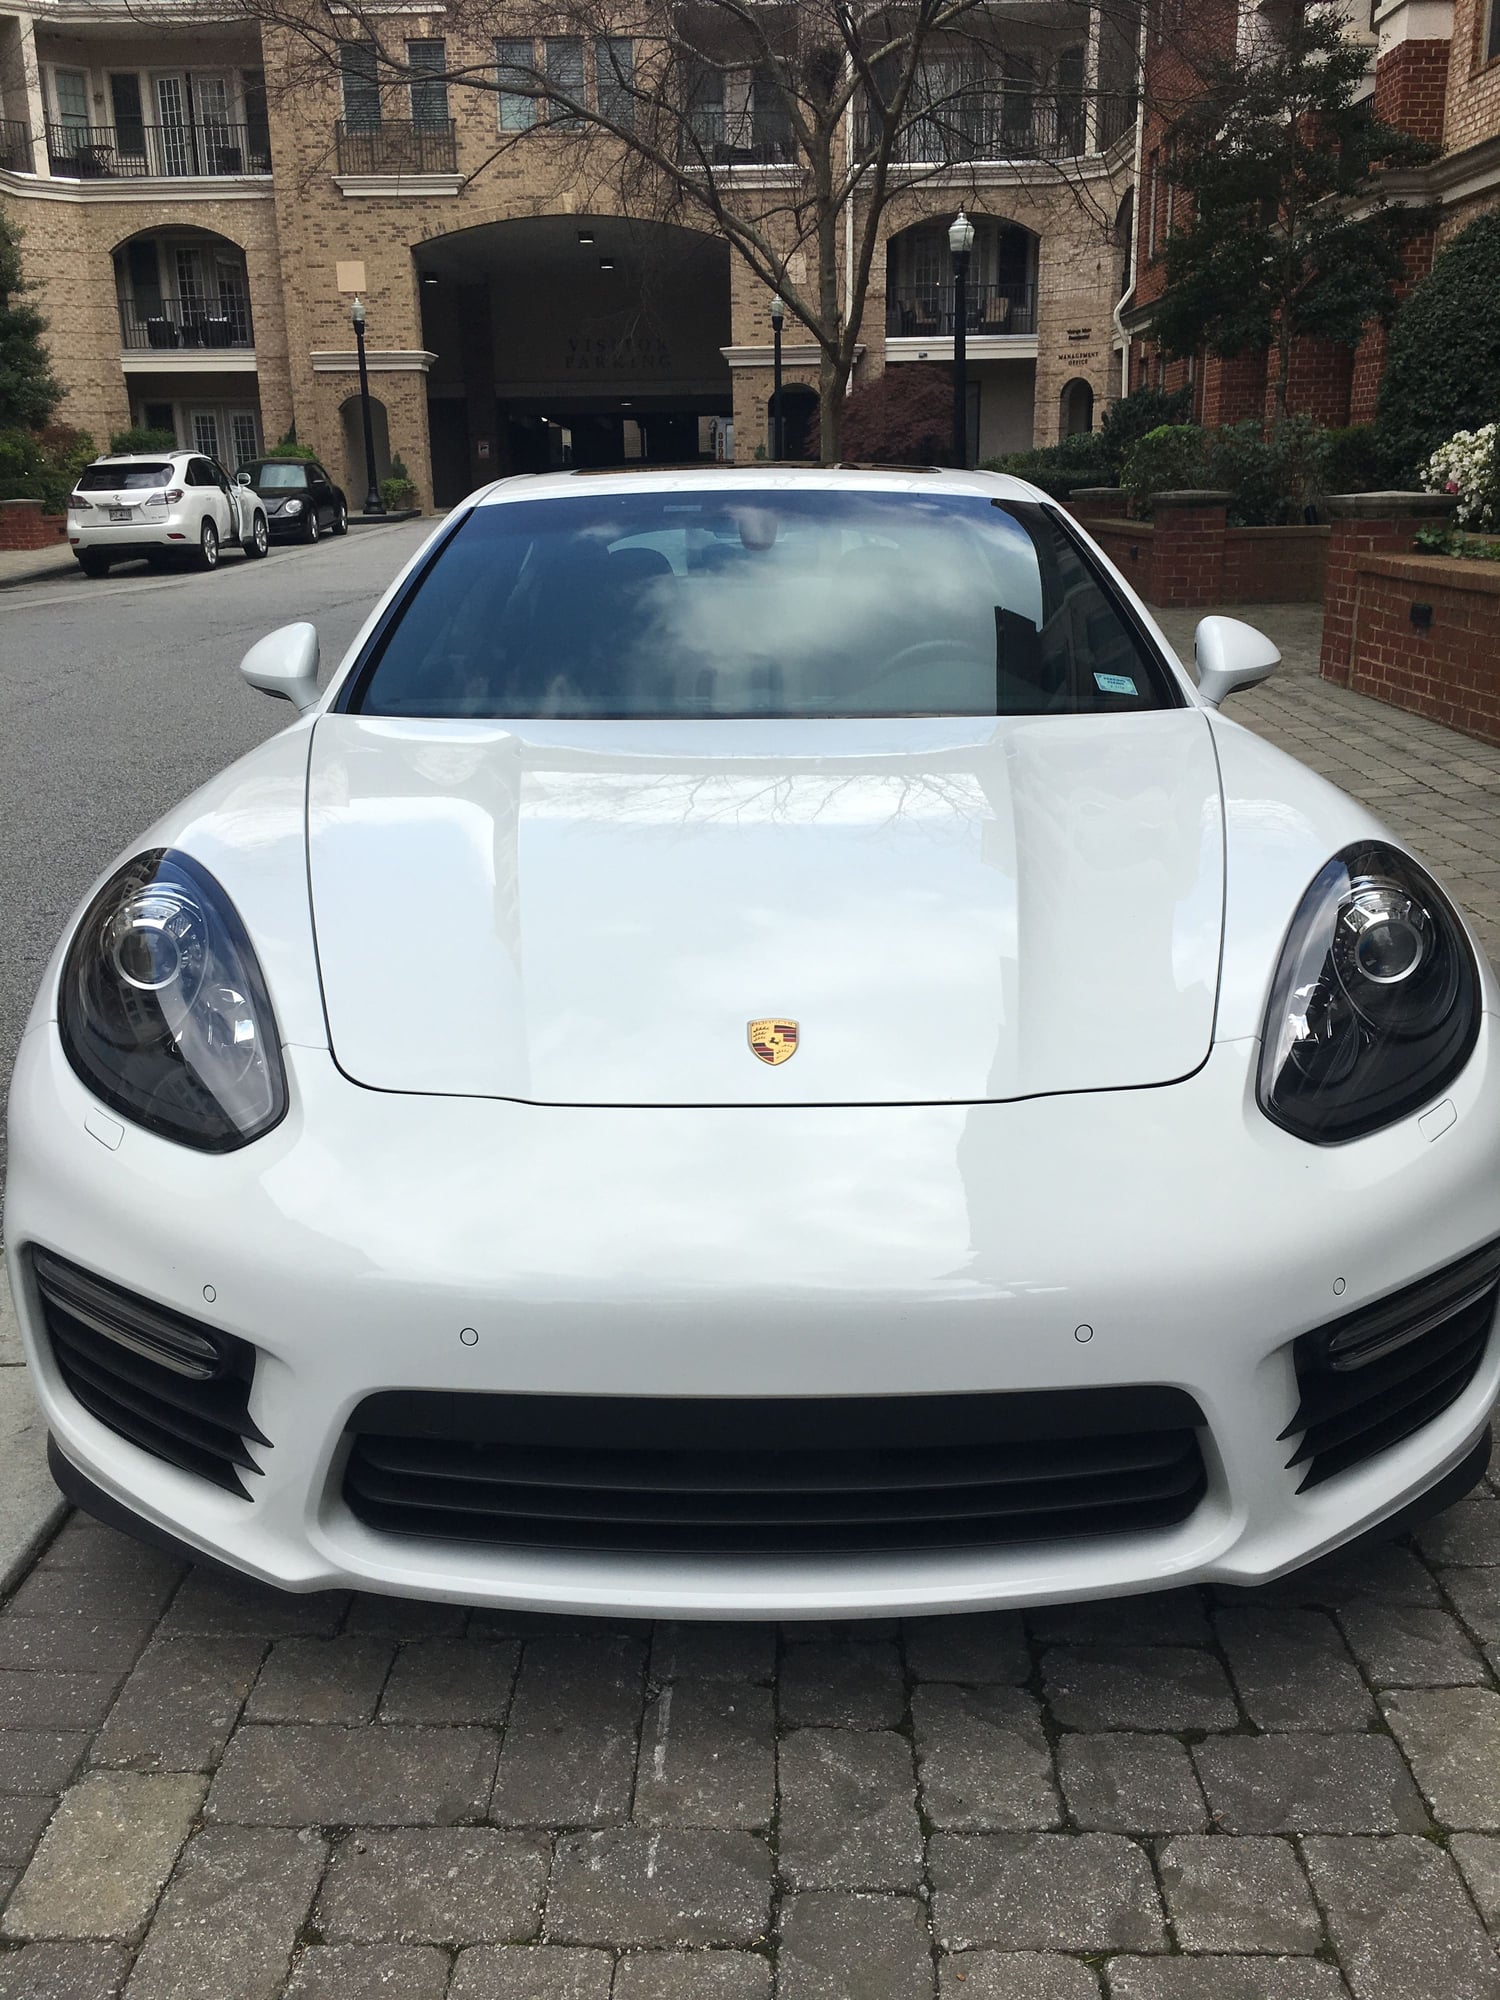 2015 Porsche Panamera - 2015 Porsche Panamera GTS, 25,400 miles, 20 months warranty - Used - VIN WP0AF2A75FL081322 - 25,400 Miles - 8 cyl - AWD - Automatic - Sedan - White - Atlanta, GA 30339, United States